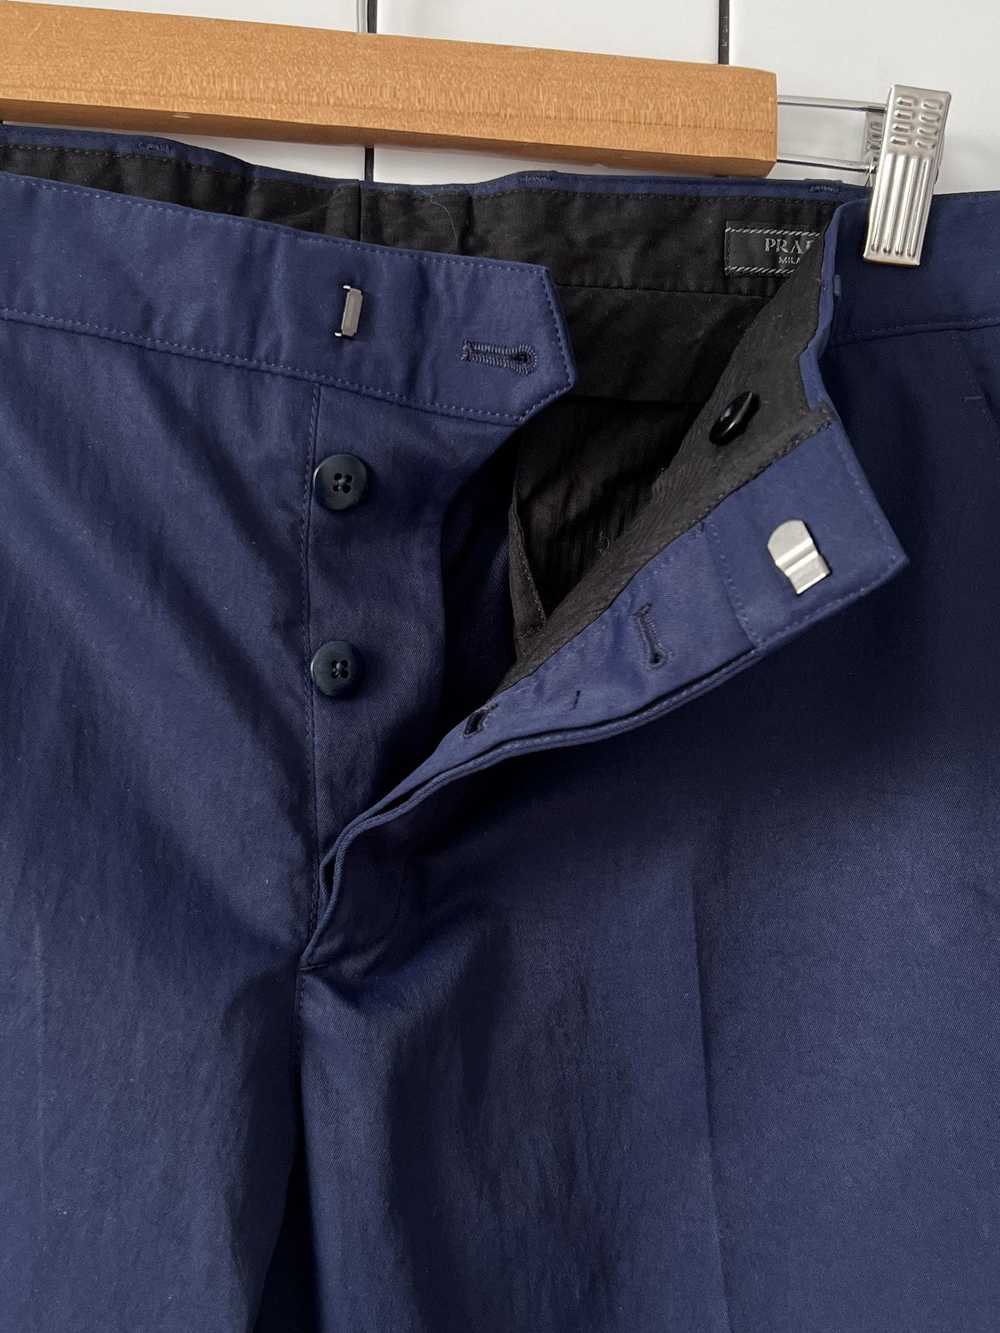 Prada PRADA Pants Suit Trousers Navy Blue red tab… - image 8